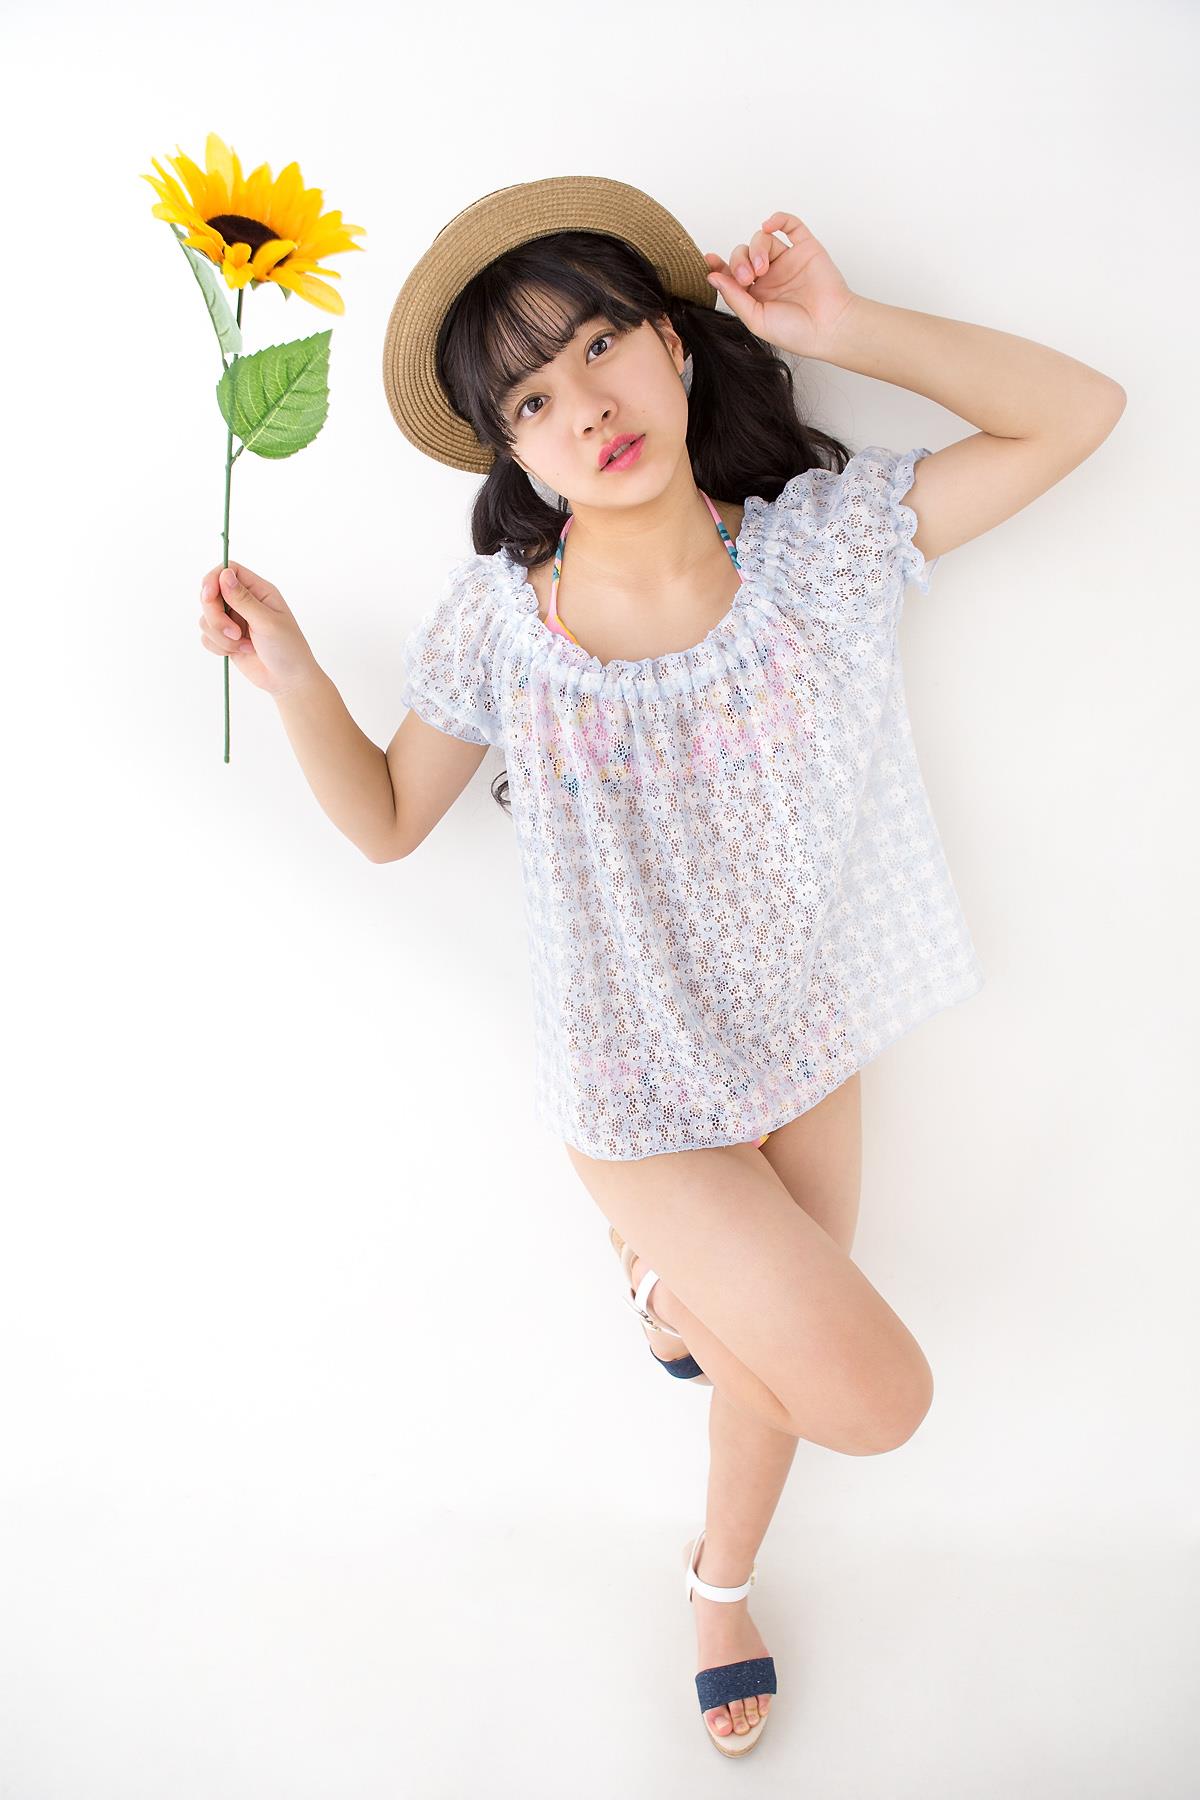 Minisuka.tv Saria Natsume 夏目咲莉愛 Premium Gallery 05 - 28.jpg